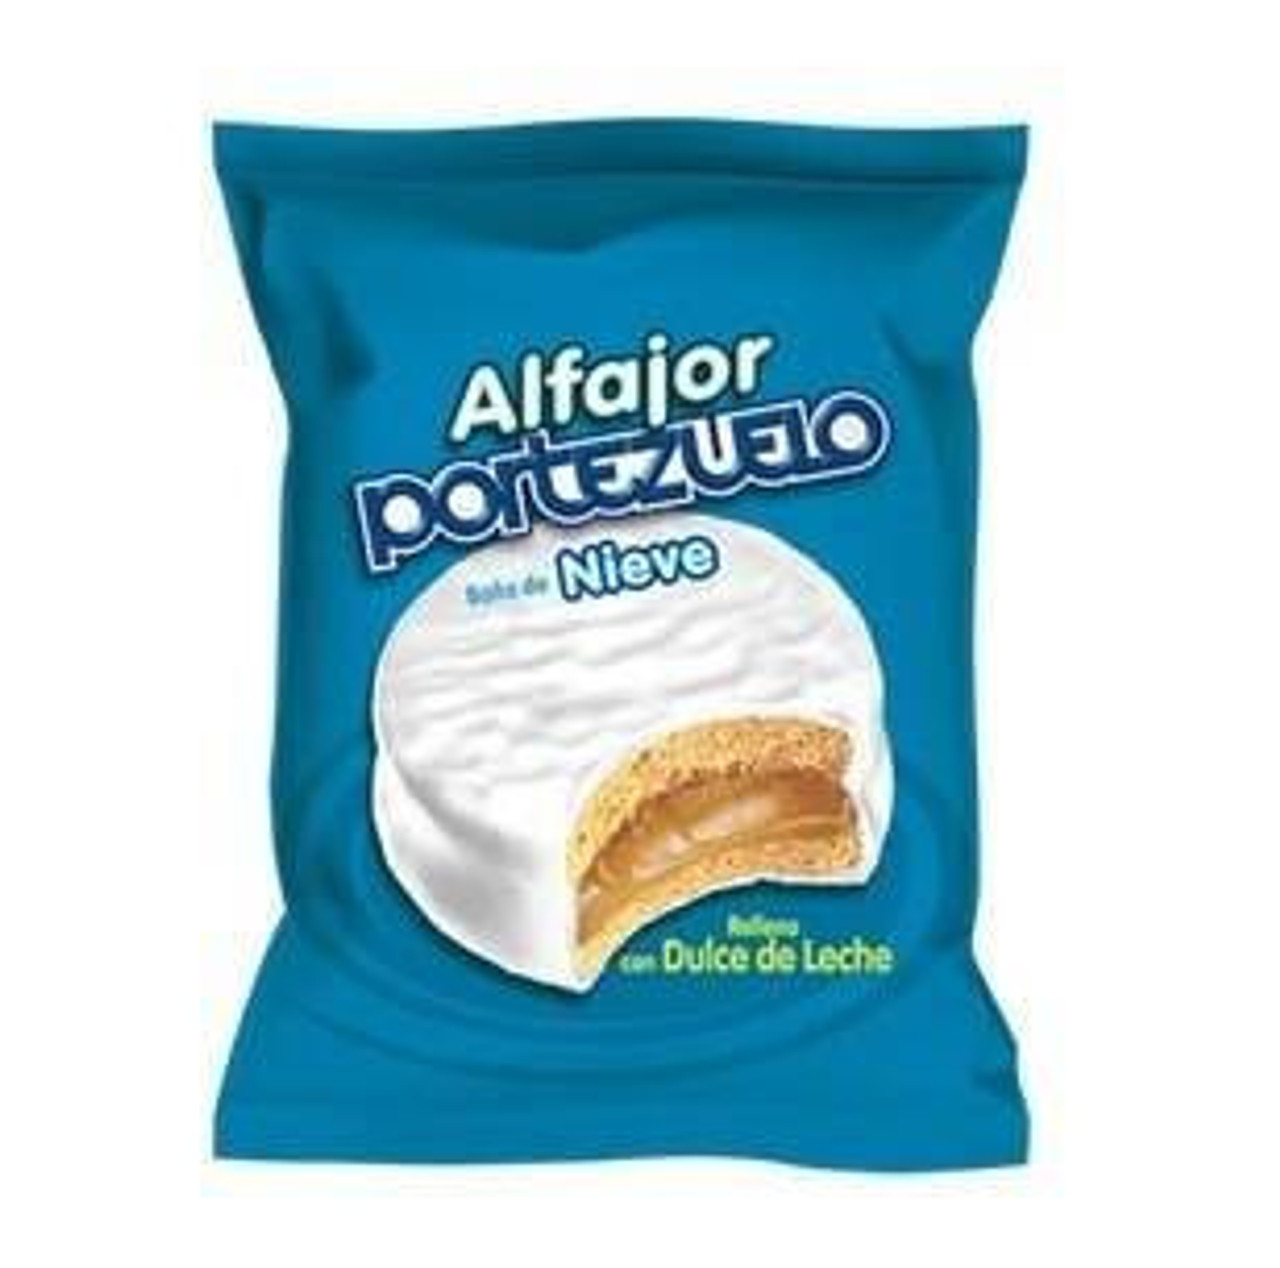 Portezuelo Alfajor Clásico Nieve Sugar Coated Filled with Dulce de Leche, 40 g / 1.41 oz (pack of - Pampa Direct